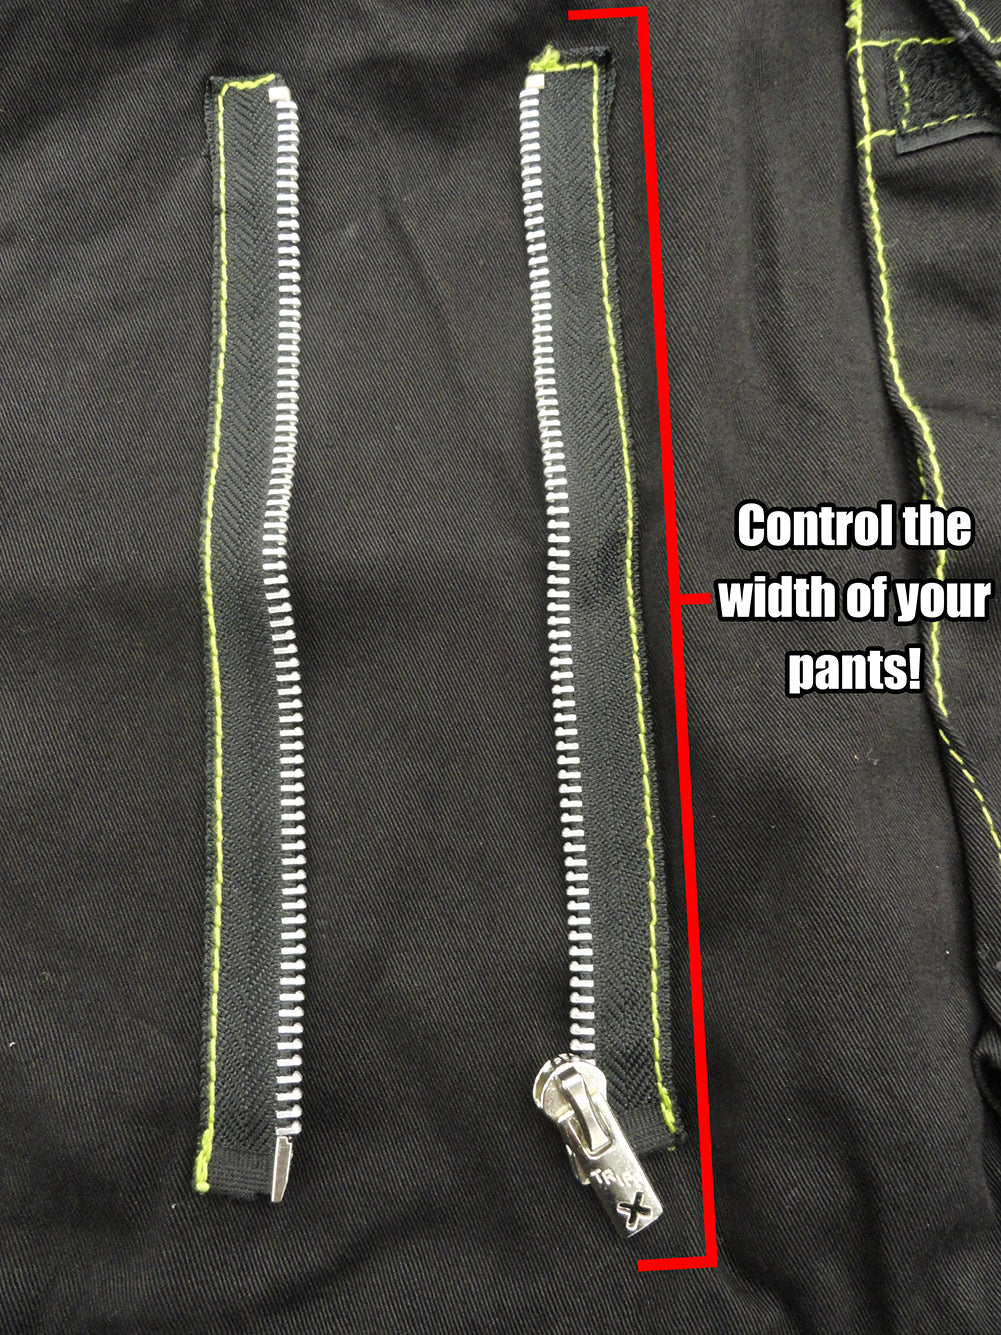 Biohazard Zip Off Pant Large / Black/Lime Biohazard